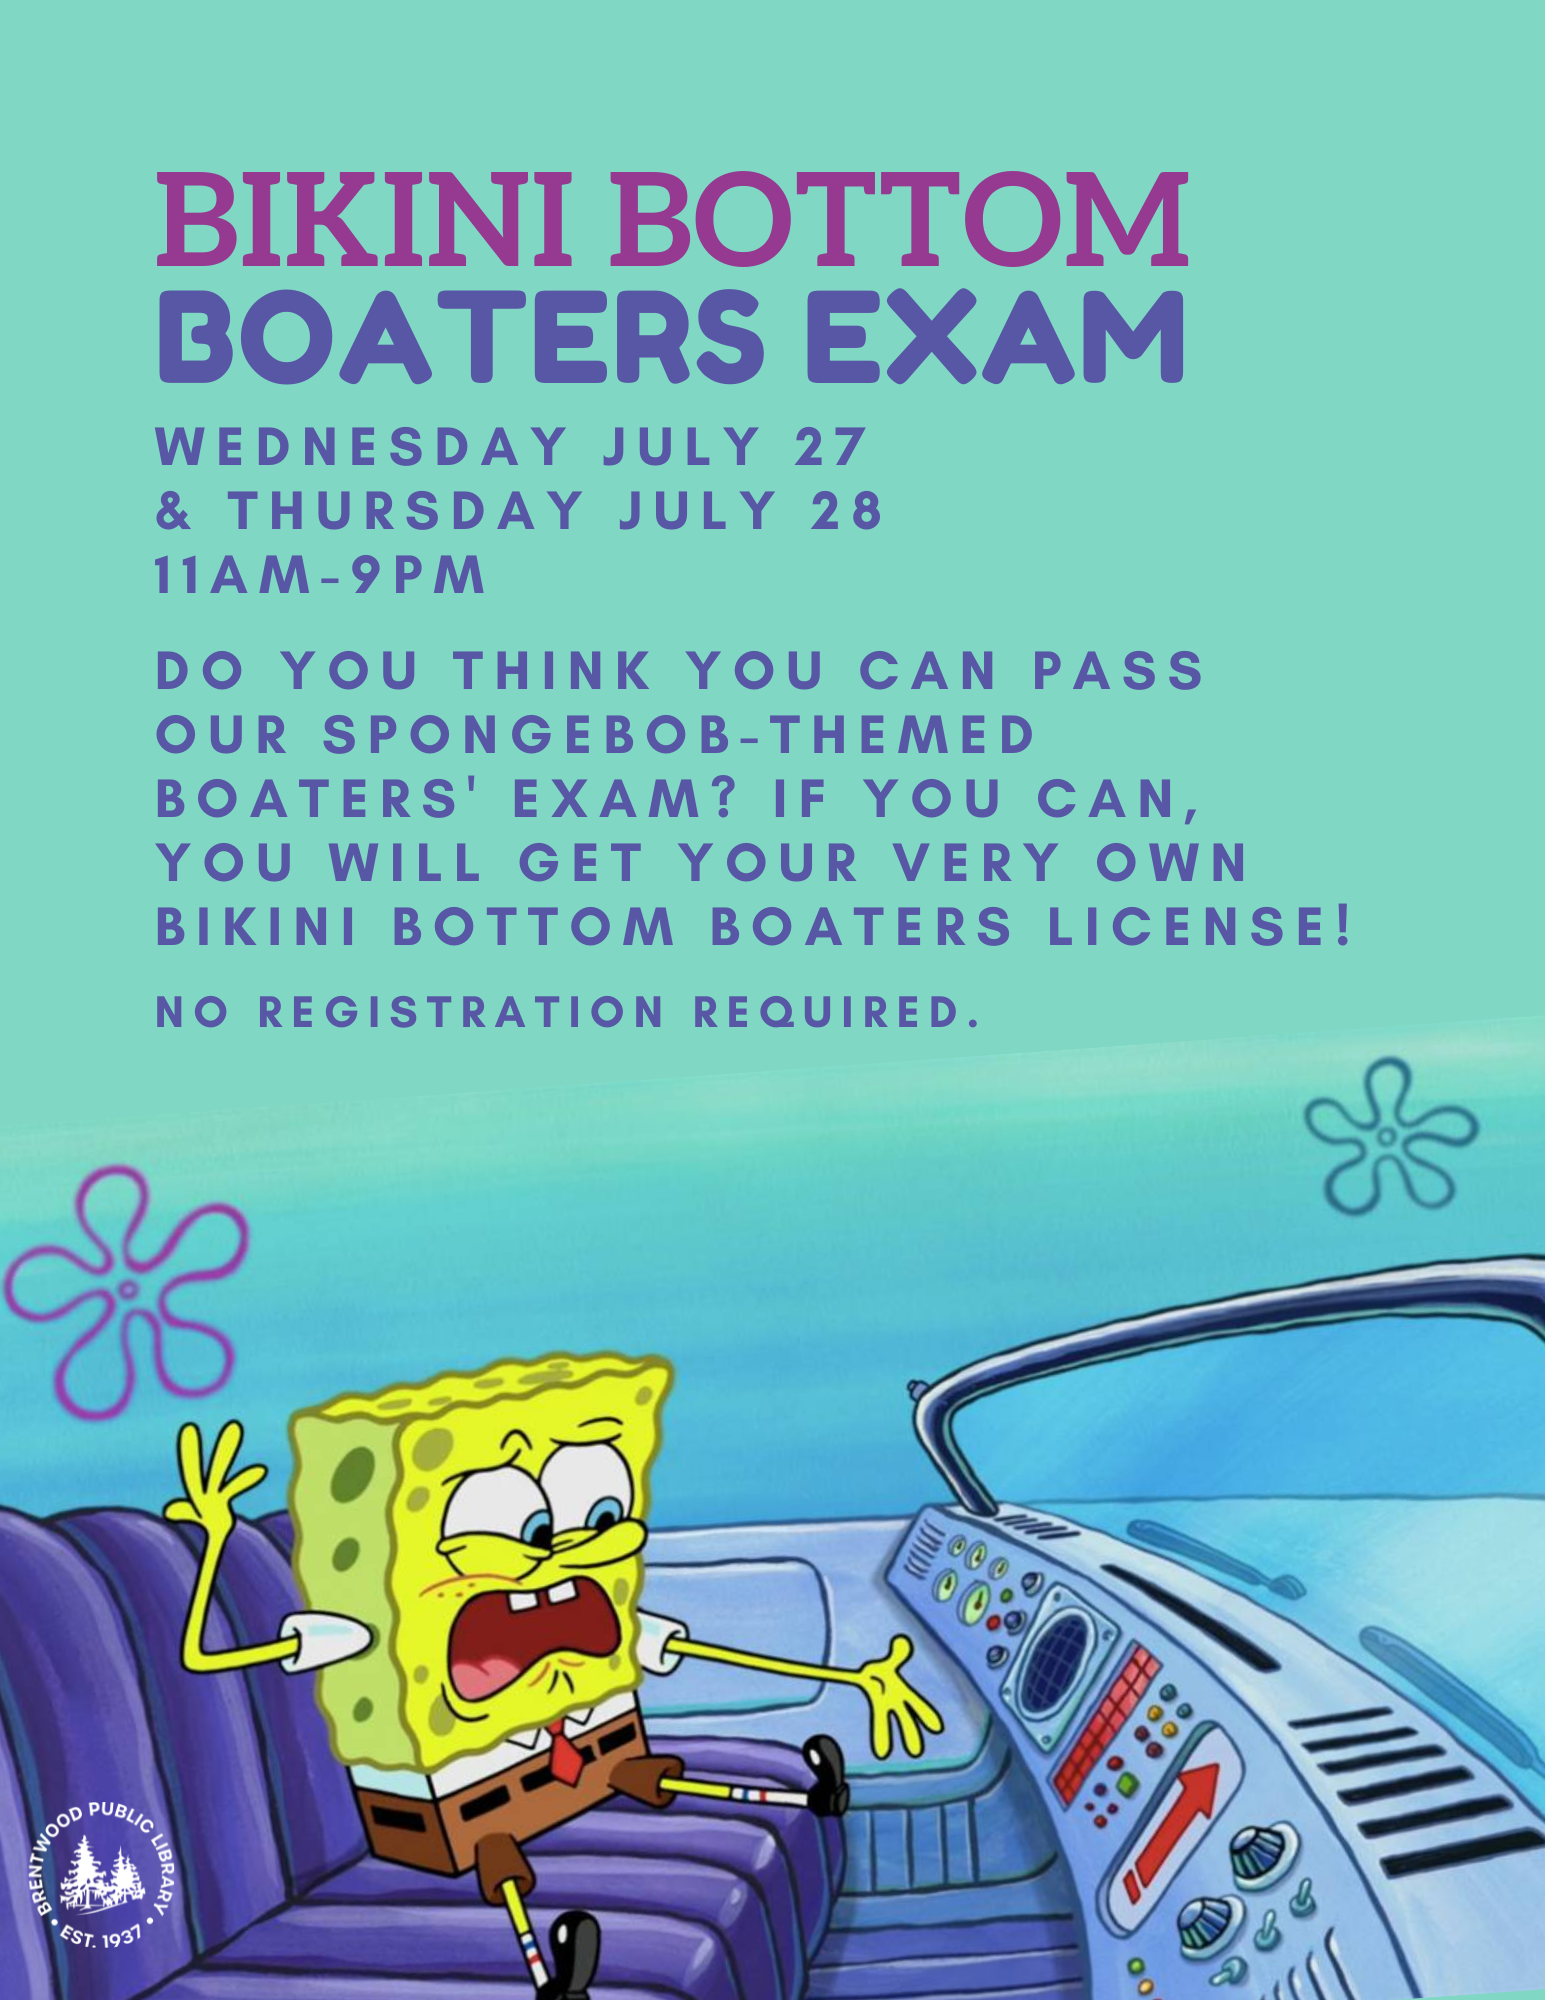 Bikini Bottom Boaters Exam